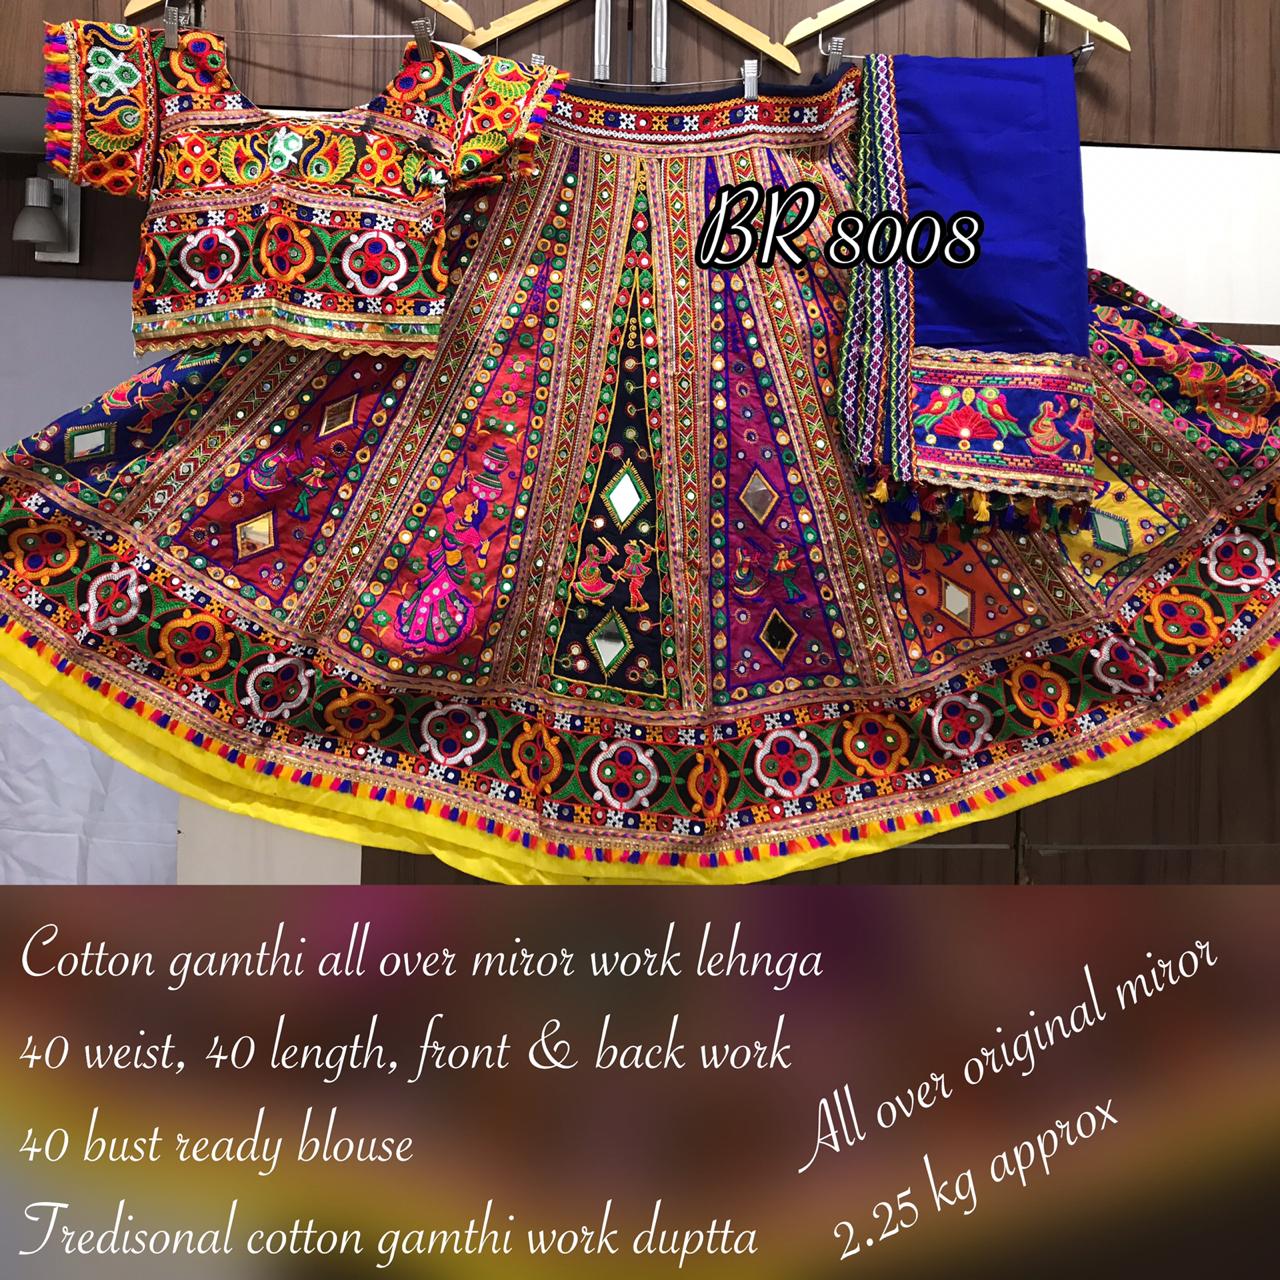 Buy Navarathri Pooja Samagri Decorative Items Online At Low Price In India Puja N Pujari